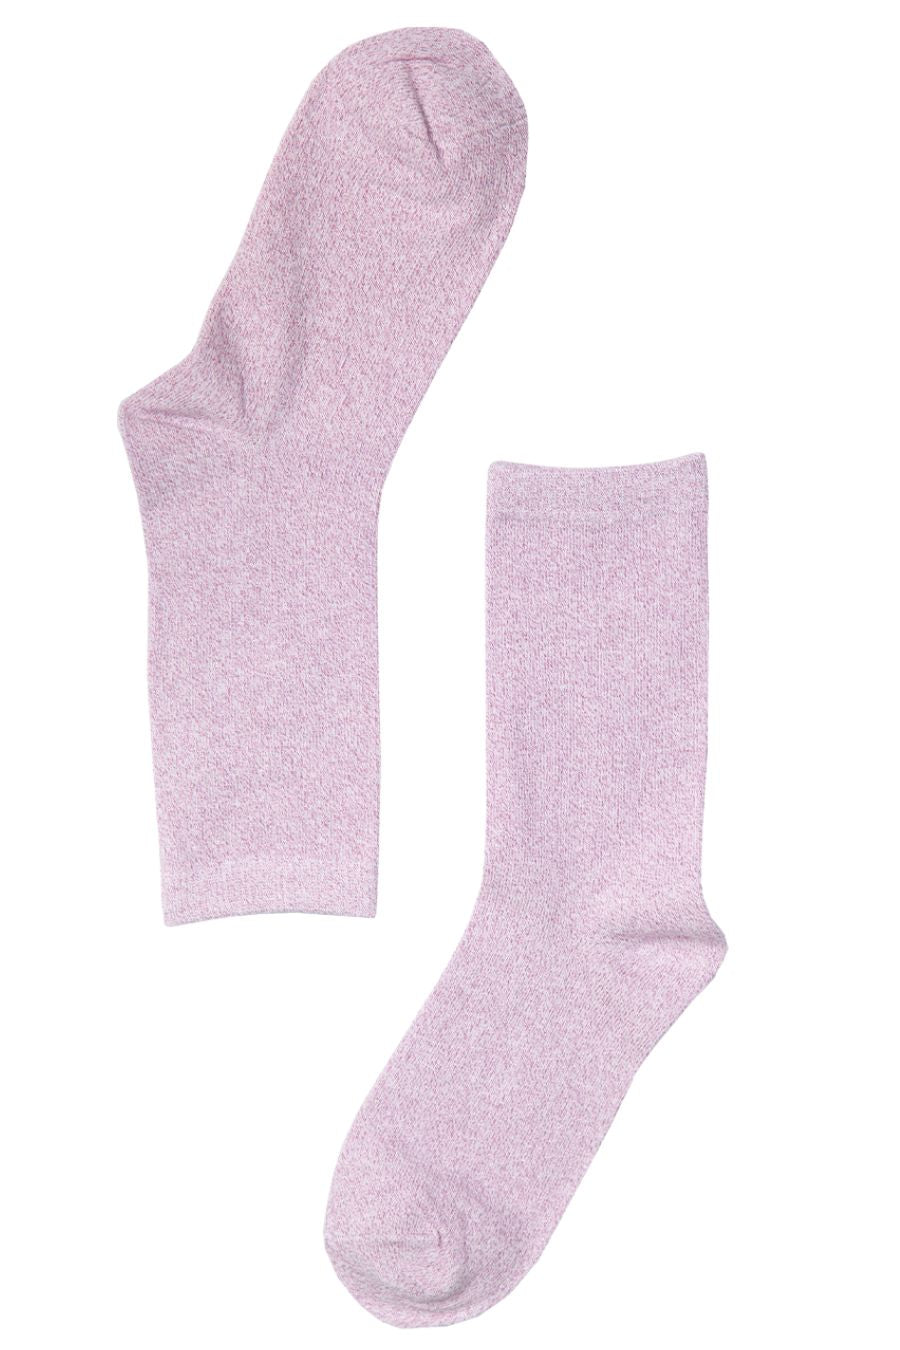 women's pink sparkly glitter socks